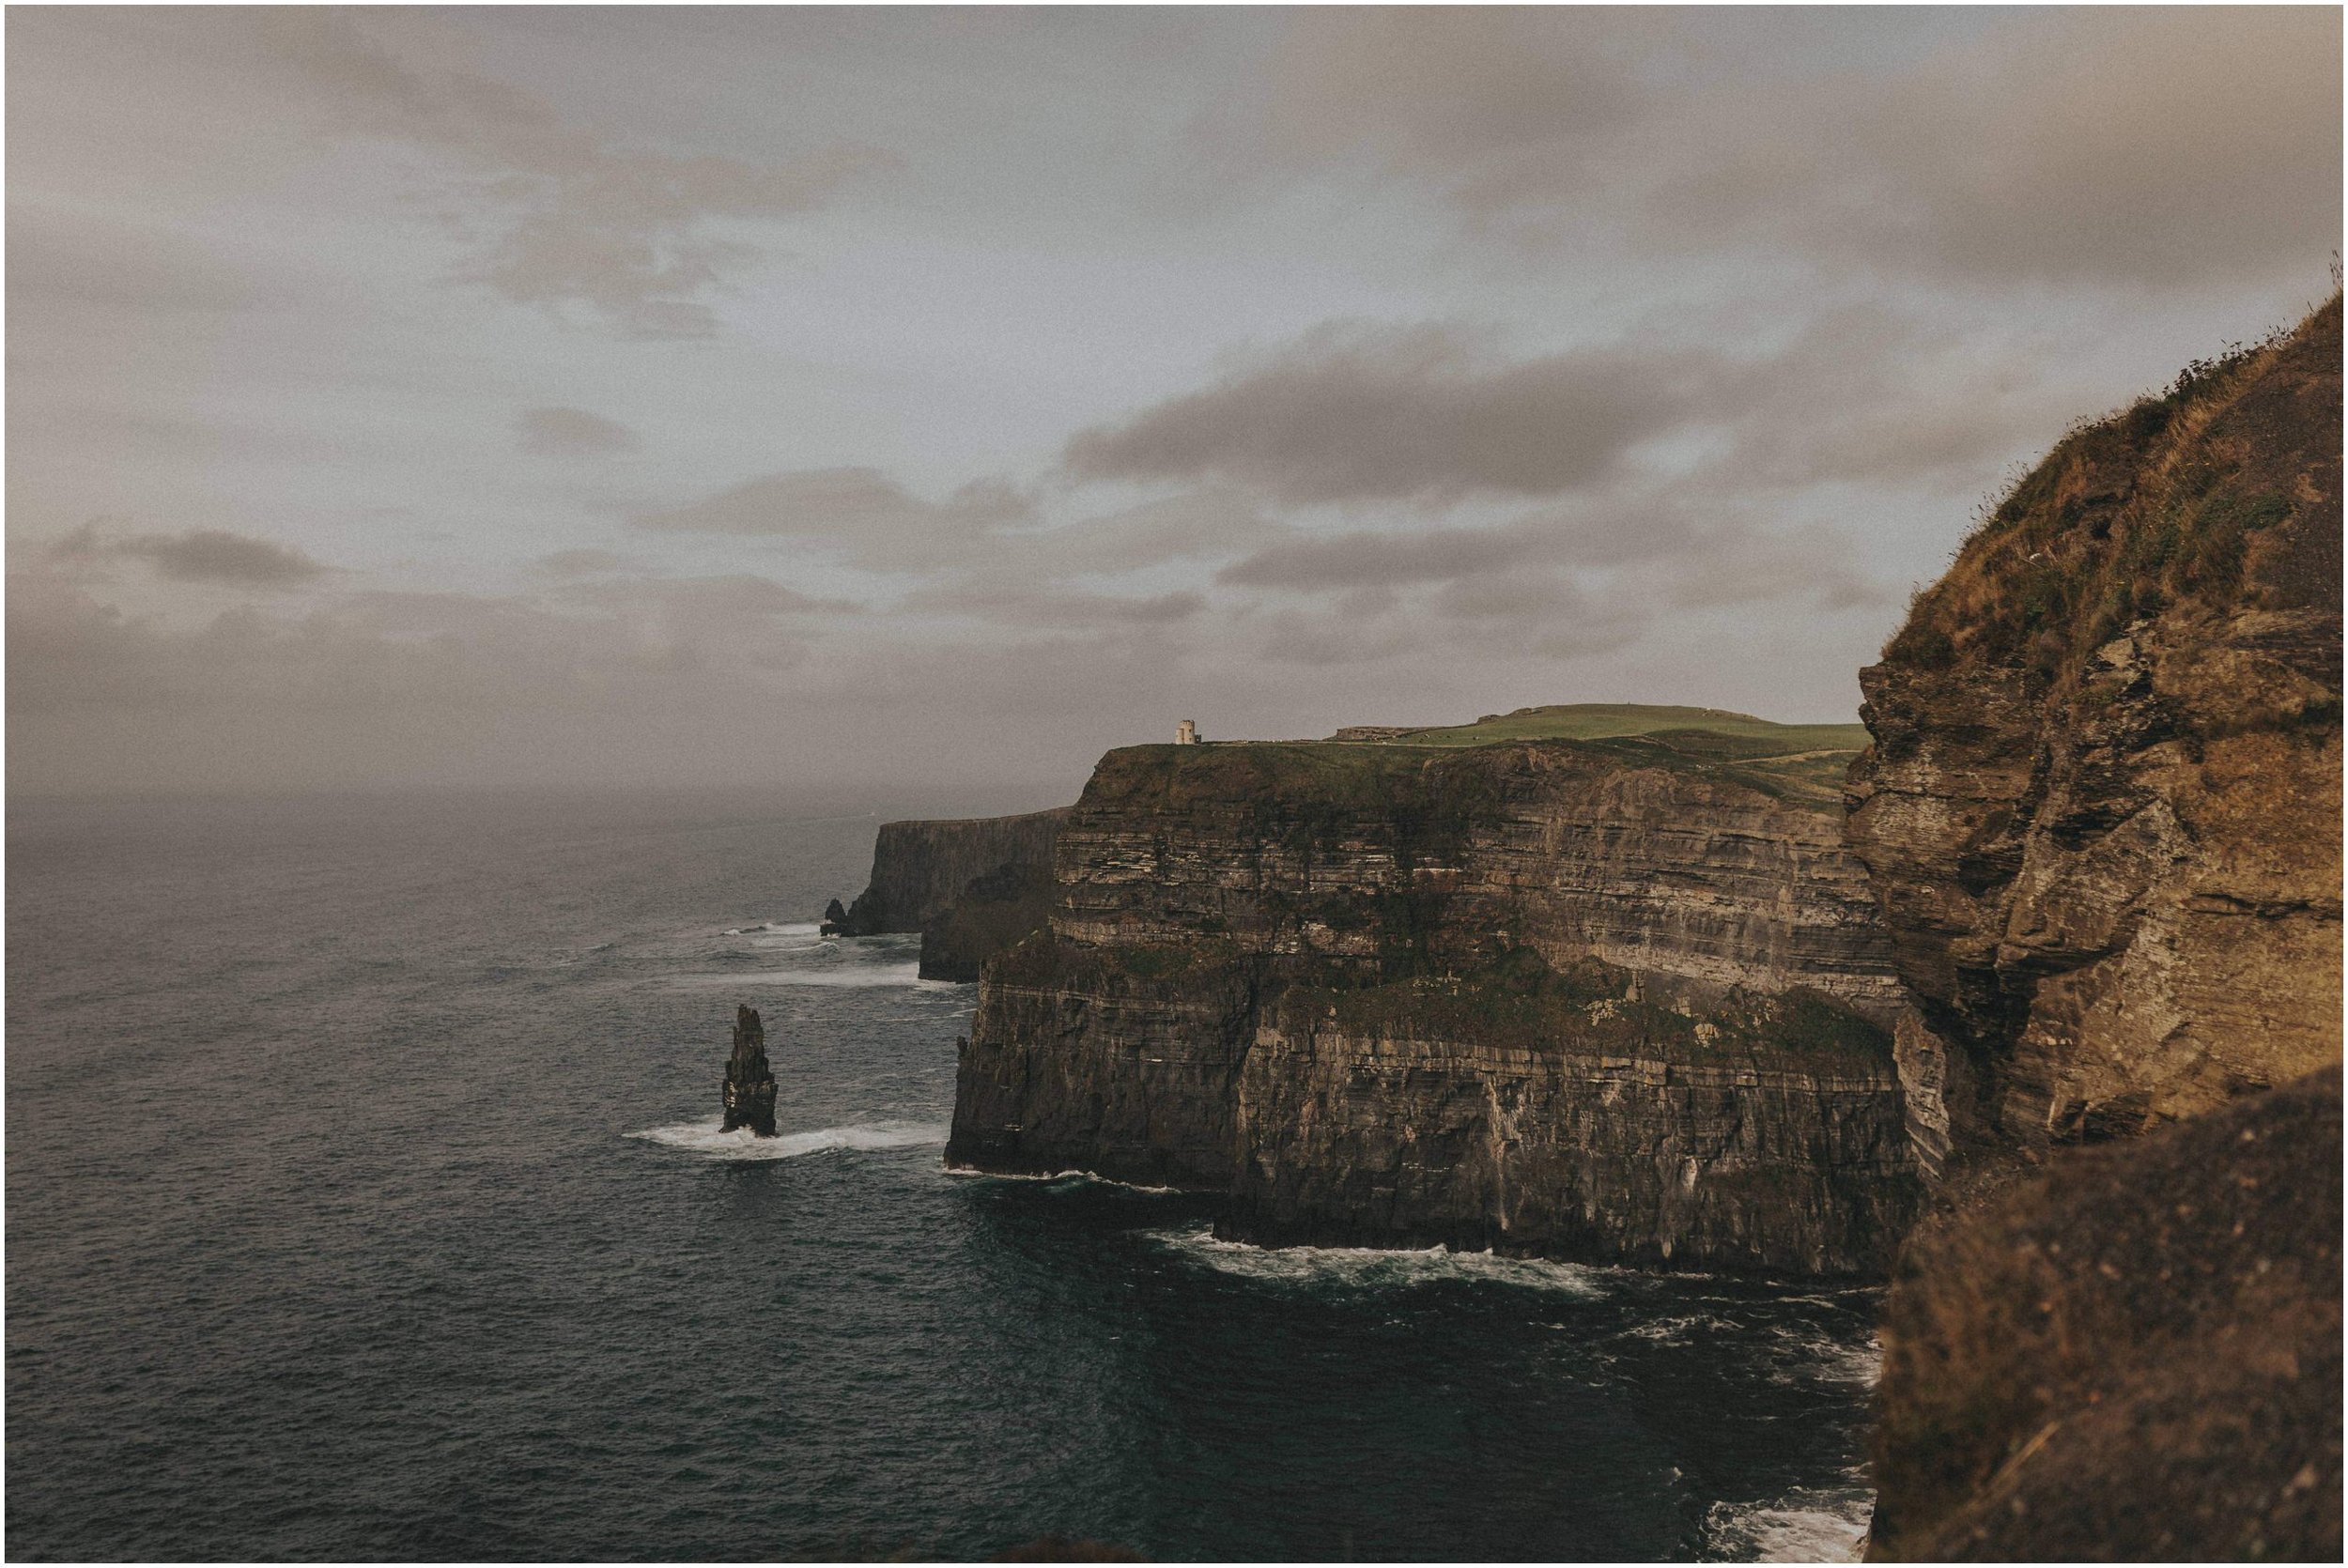 Cliffs-of-moher-eloping-to-ireland-133.jpg